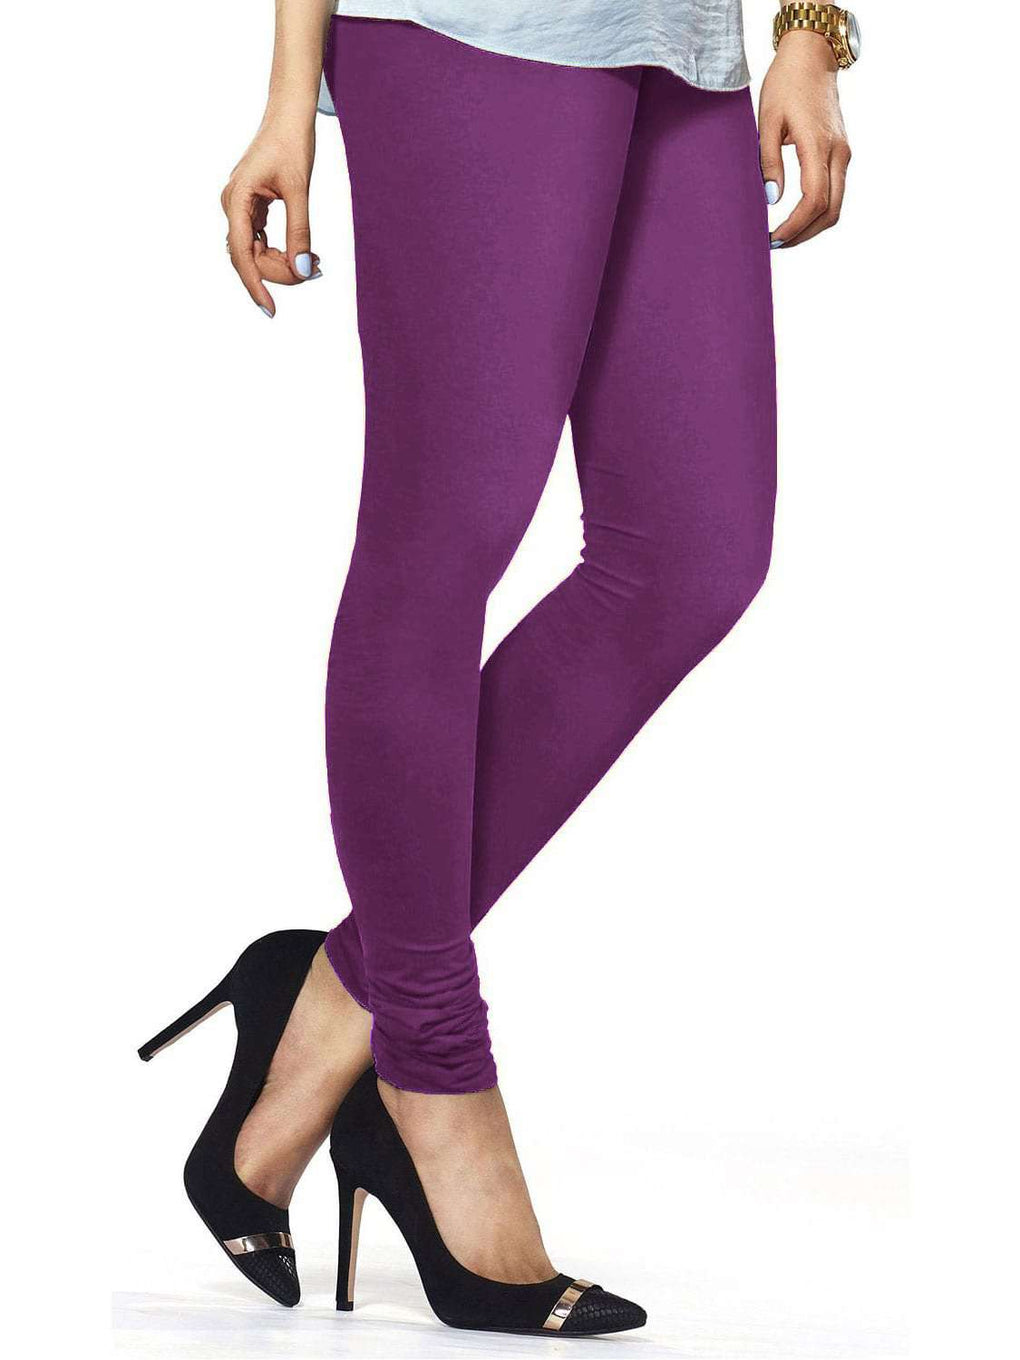 Buy online Cotton Legging Purple Color from Capris & Leggings for